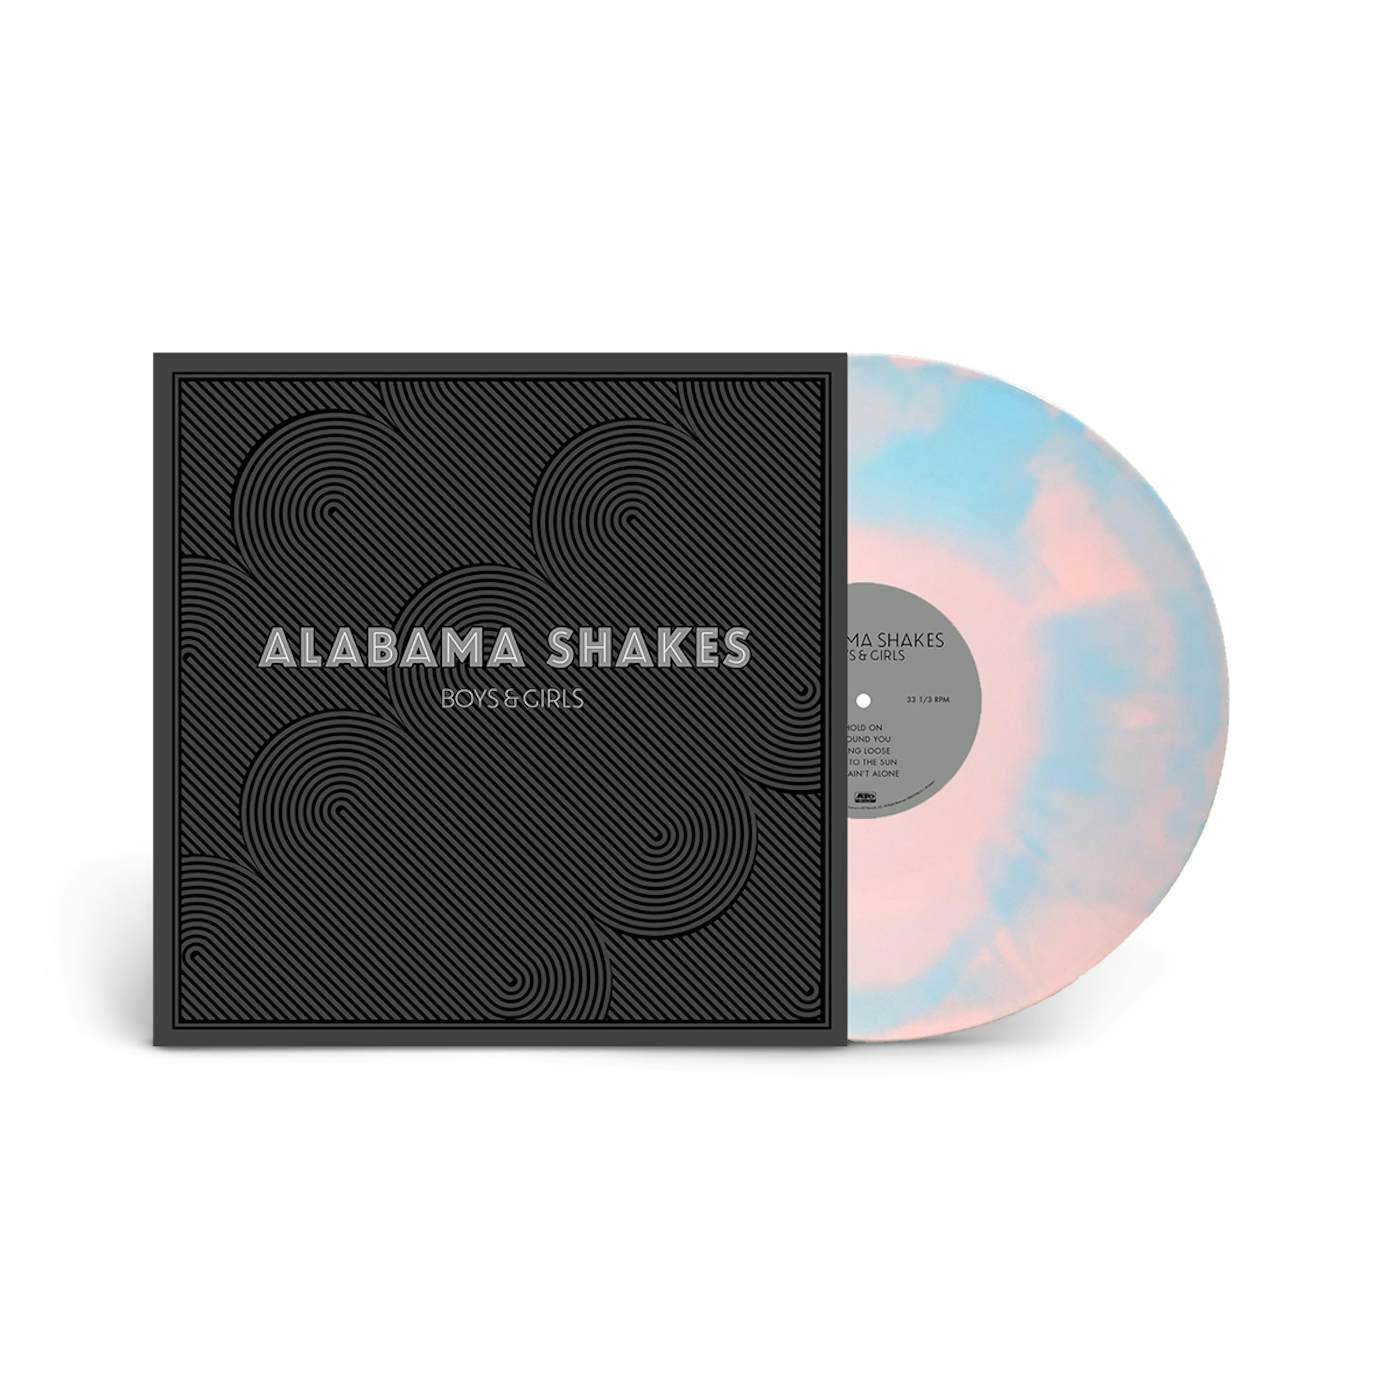 Alabama Shakes - Boys & Girls "Platinum Anniversary" Colored Vinyl Reissue (Pink/Turquoise Swirl)